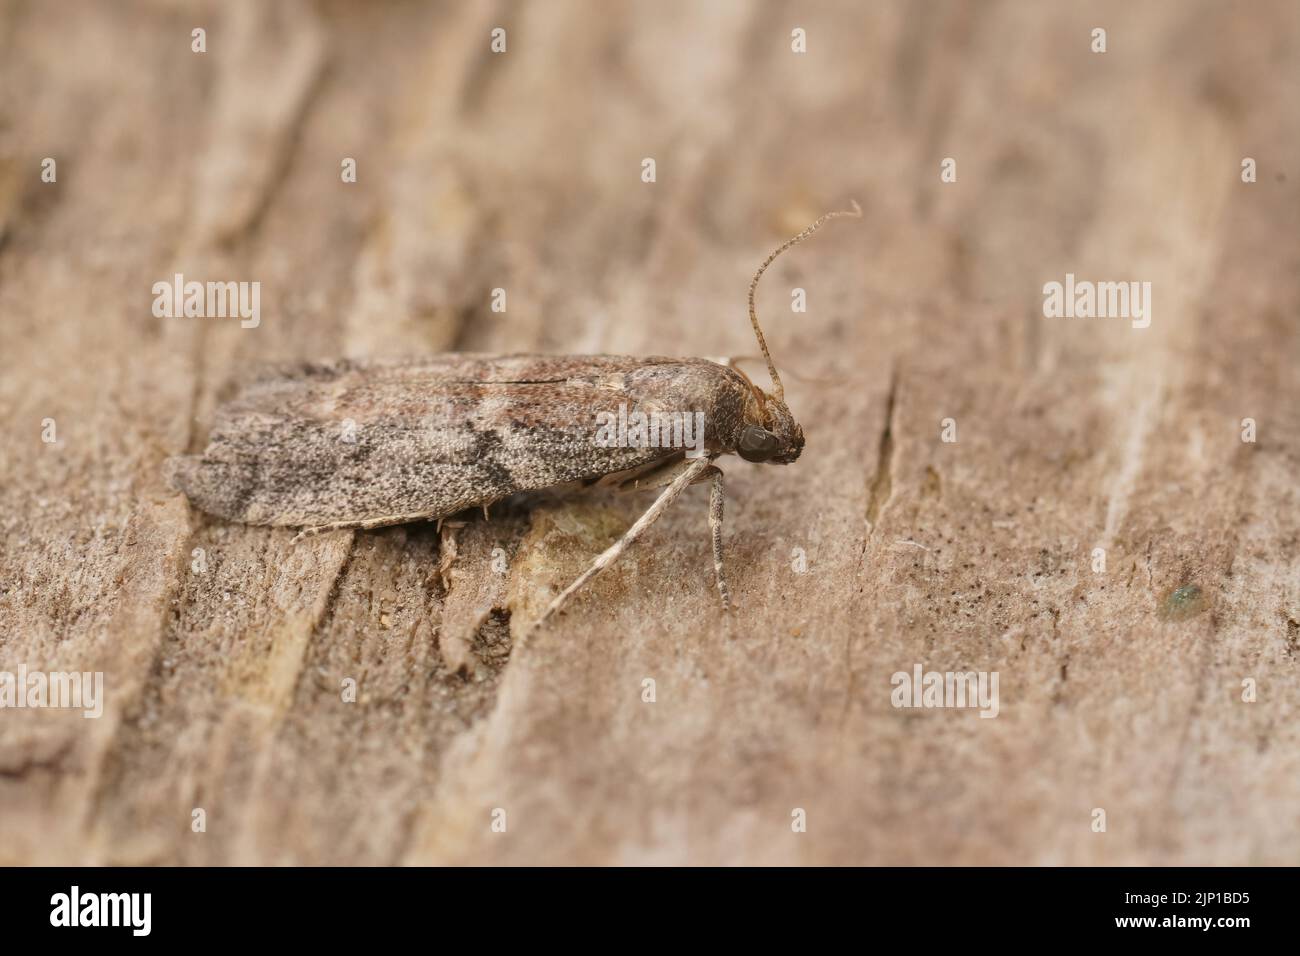 Detailed closeup on the small Tobacco Moth, Ephestia elutella, sitting on wood Stock Photo